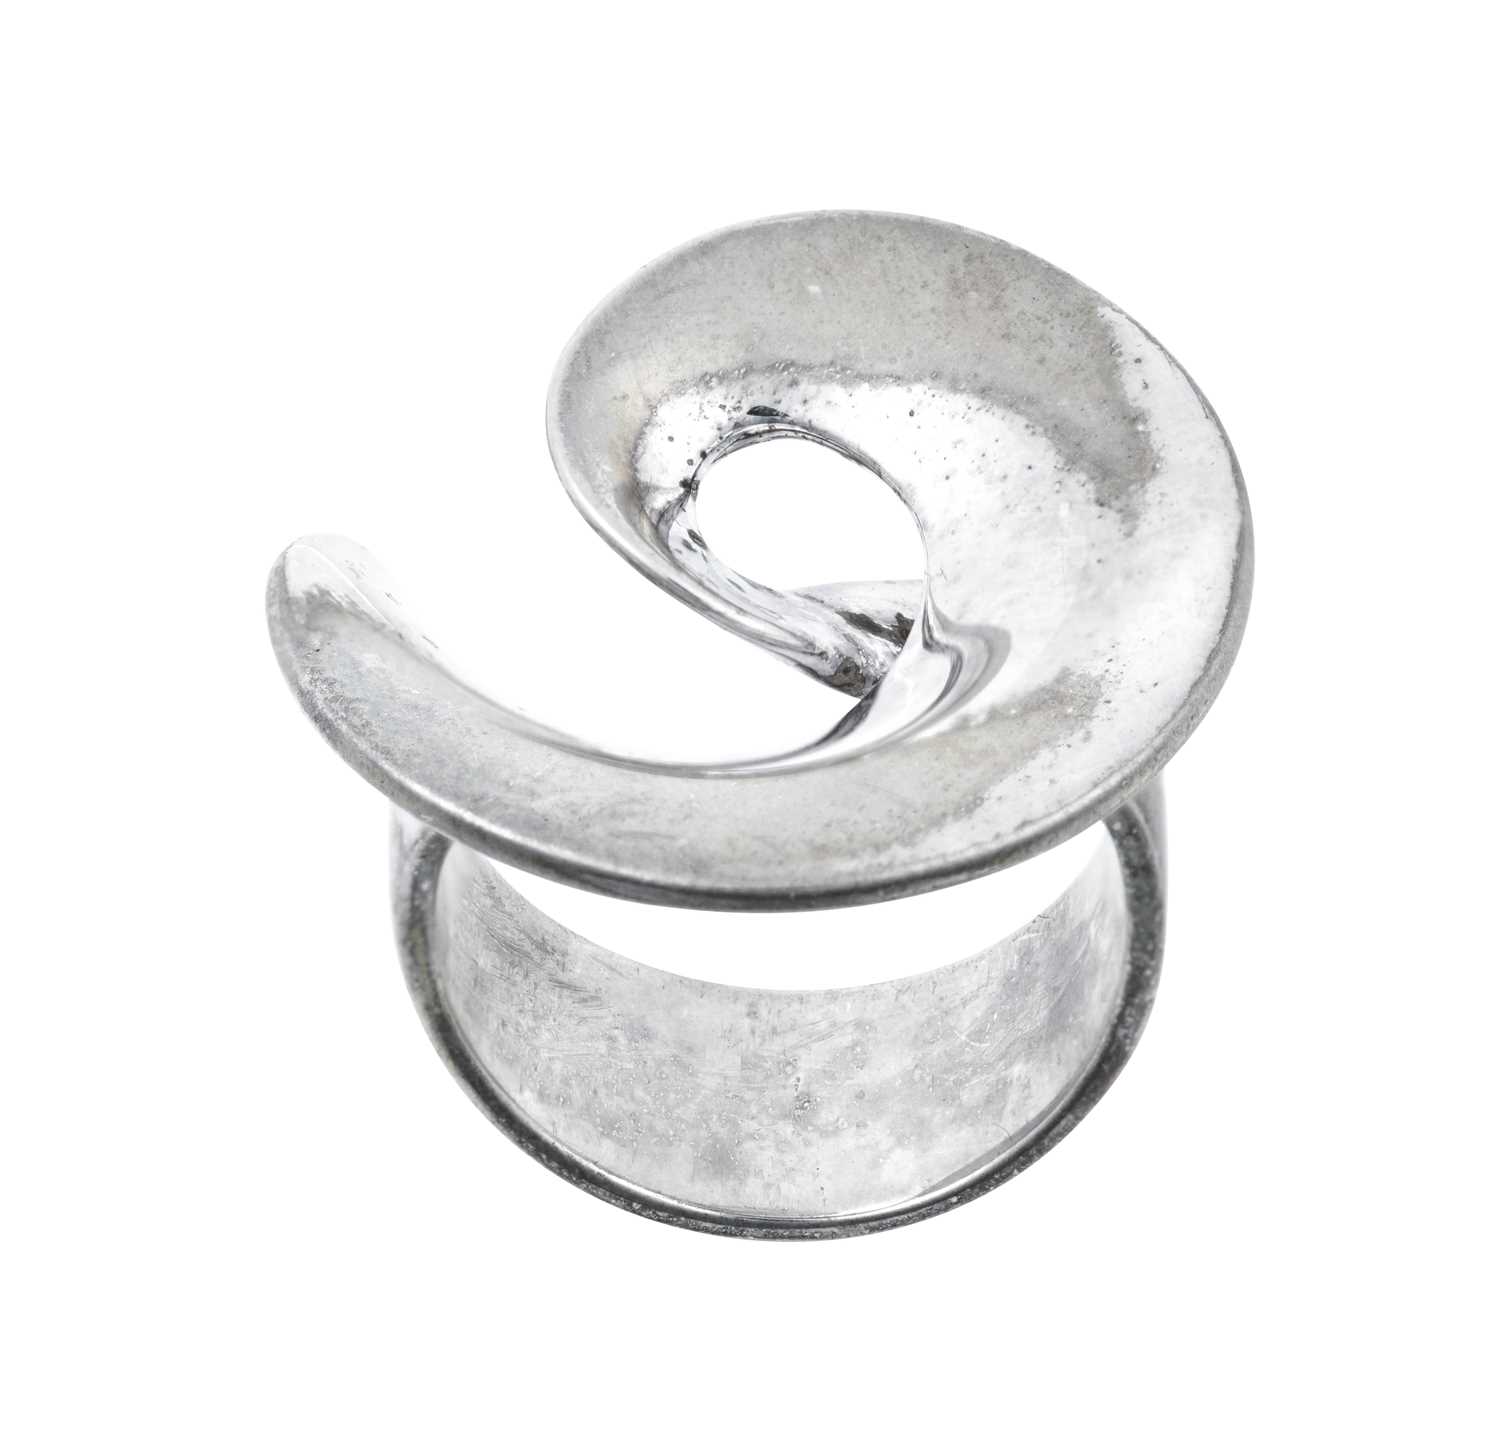 A 'Continuity' Ring, designed by Vivianna Torun Bülow-Hübe for Georg Jensen of white plain